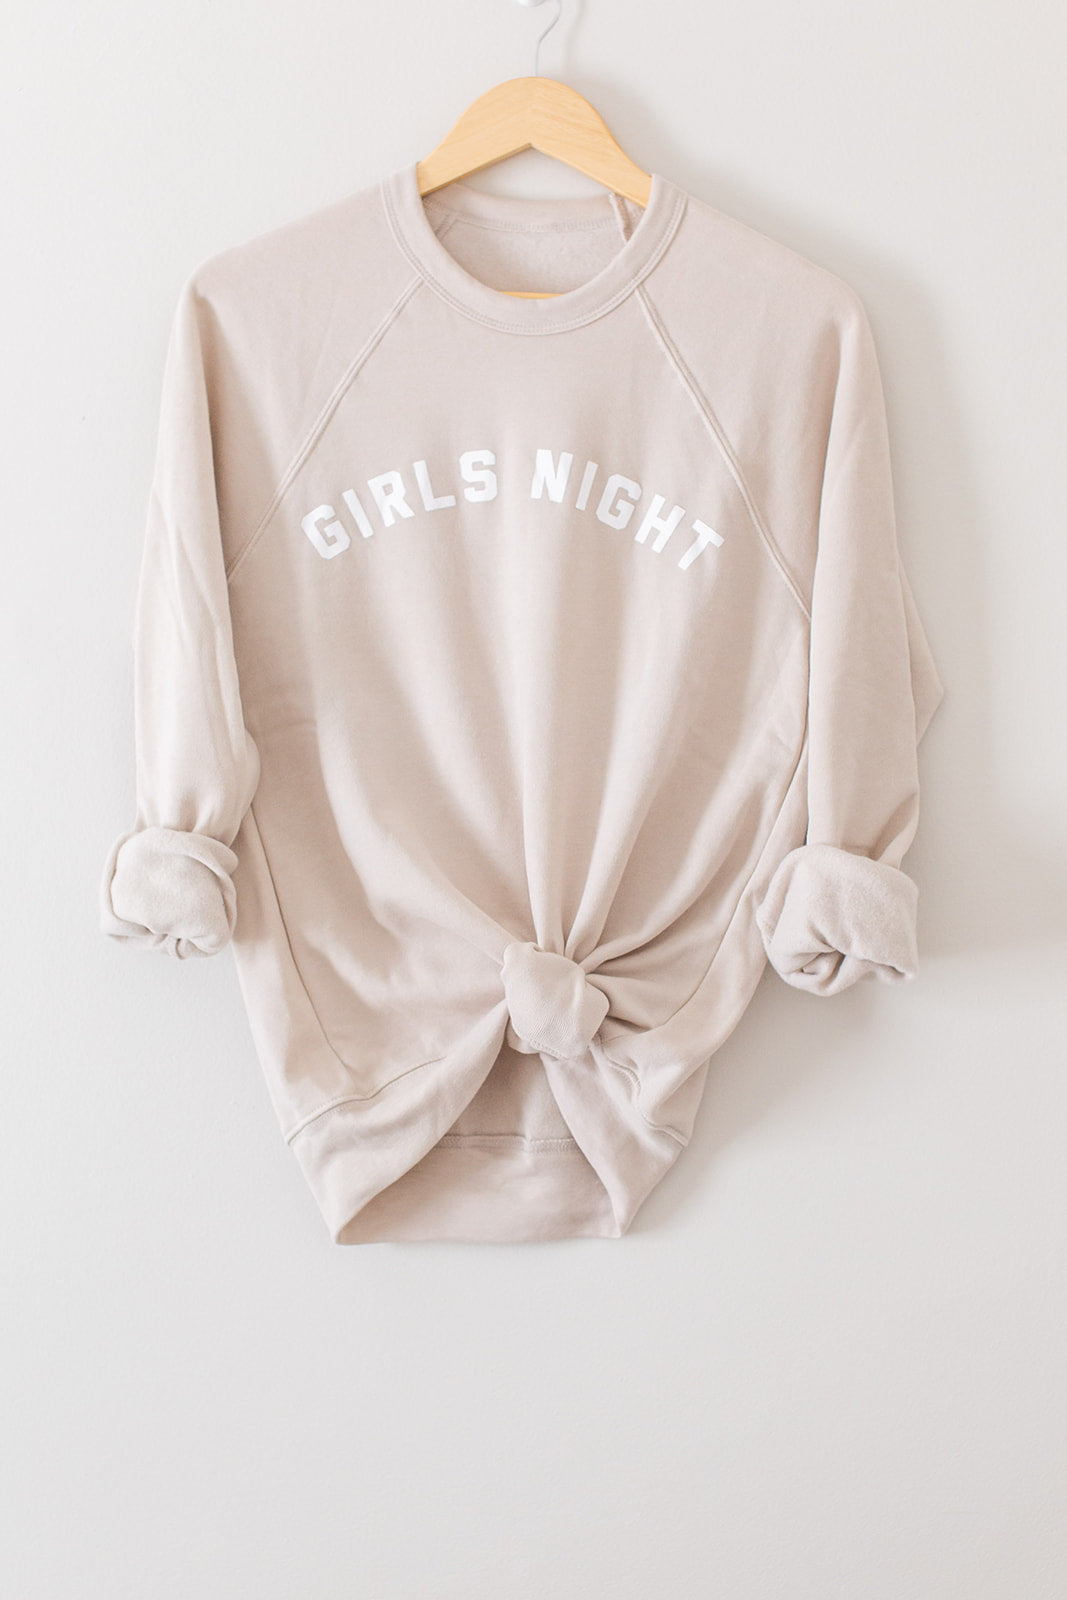 Classic Girls Night Sweatshirt - cozy material for any season